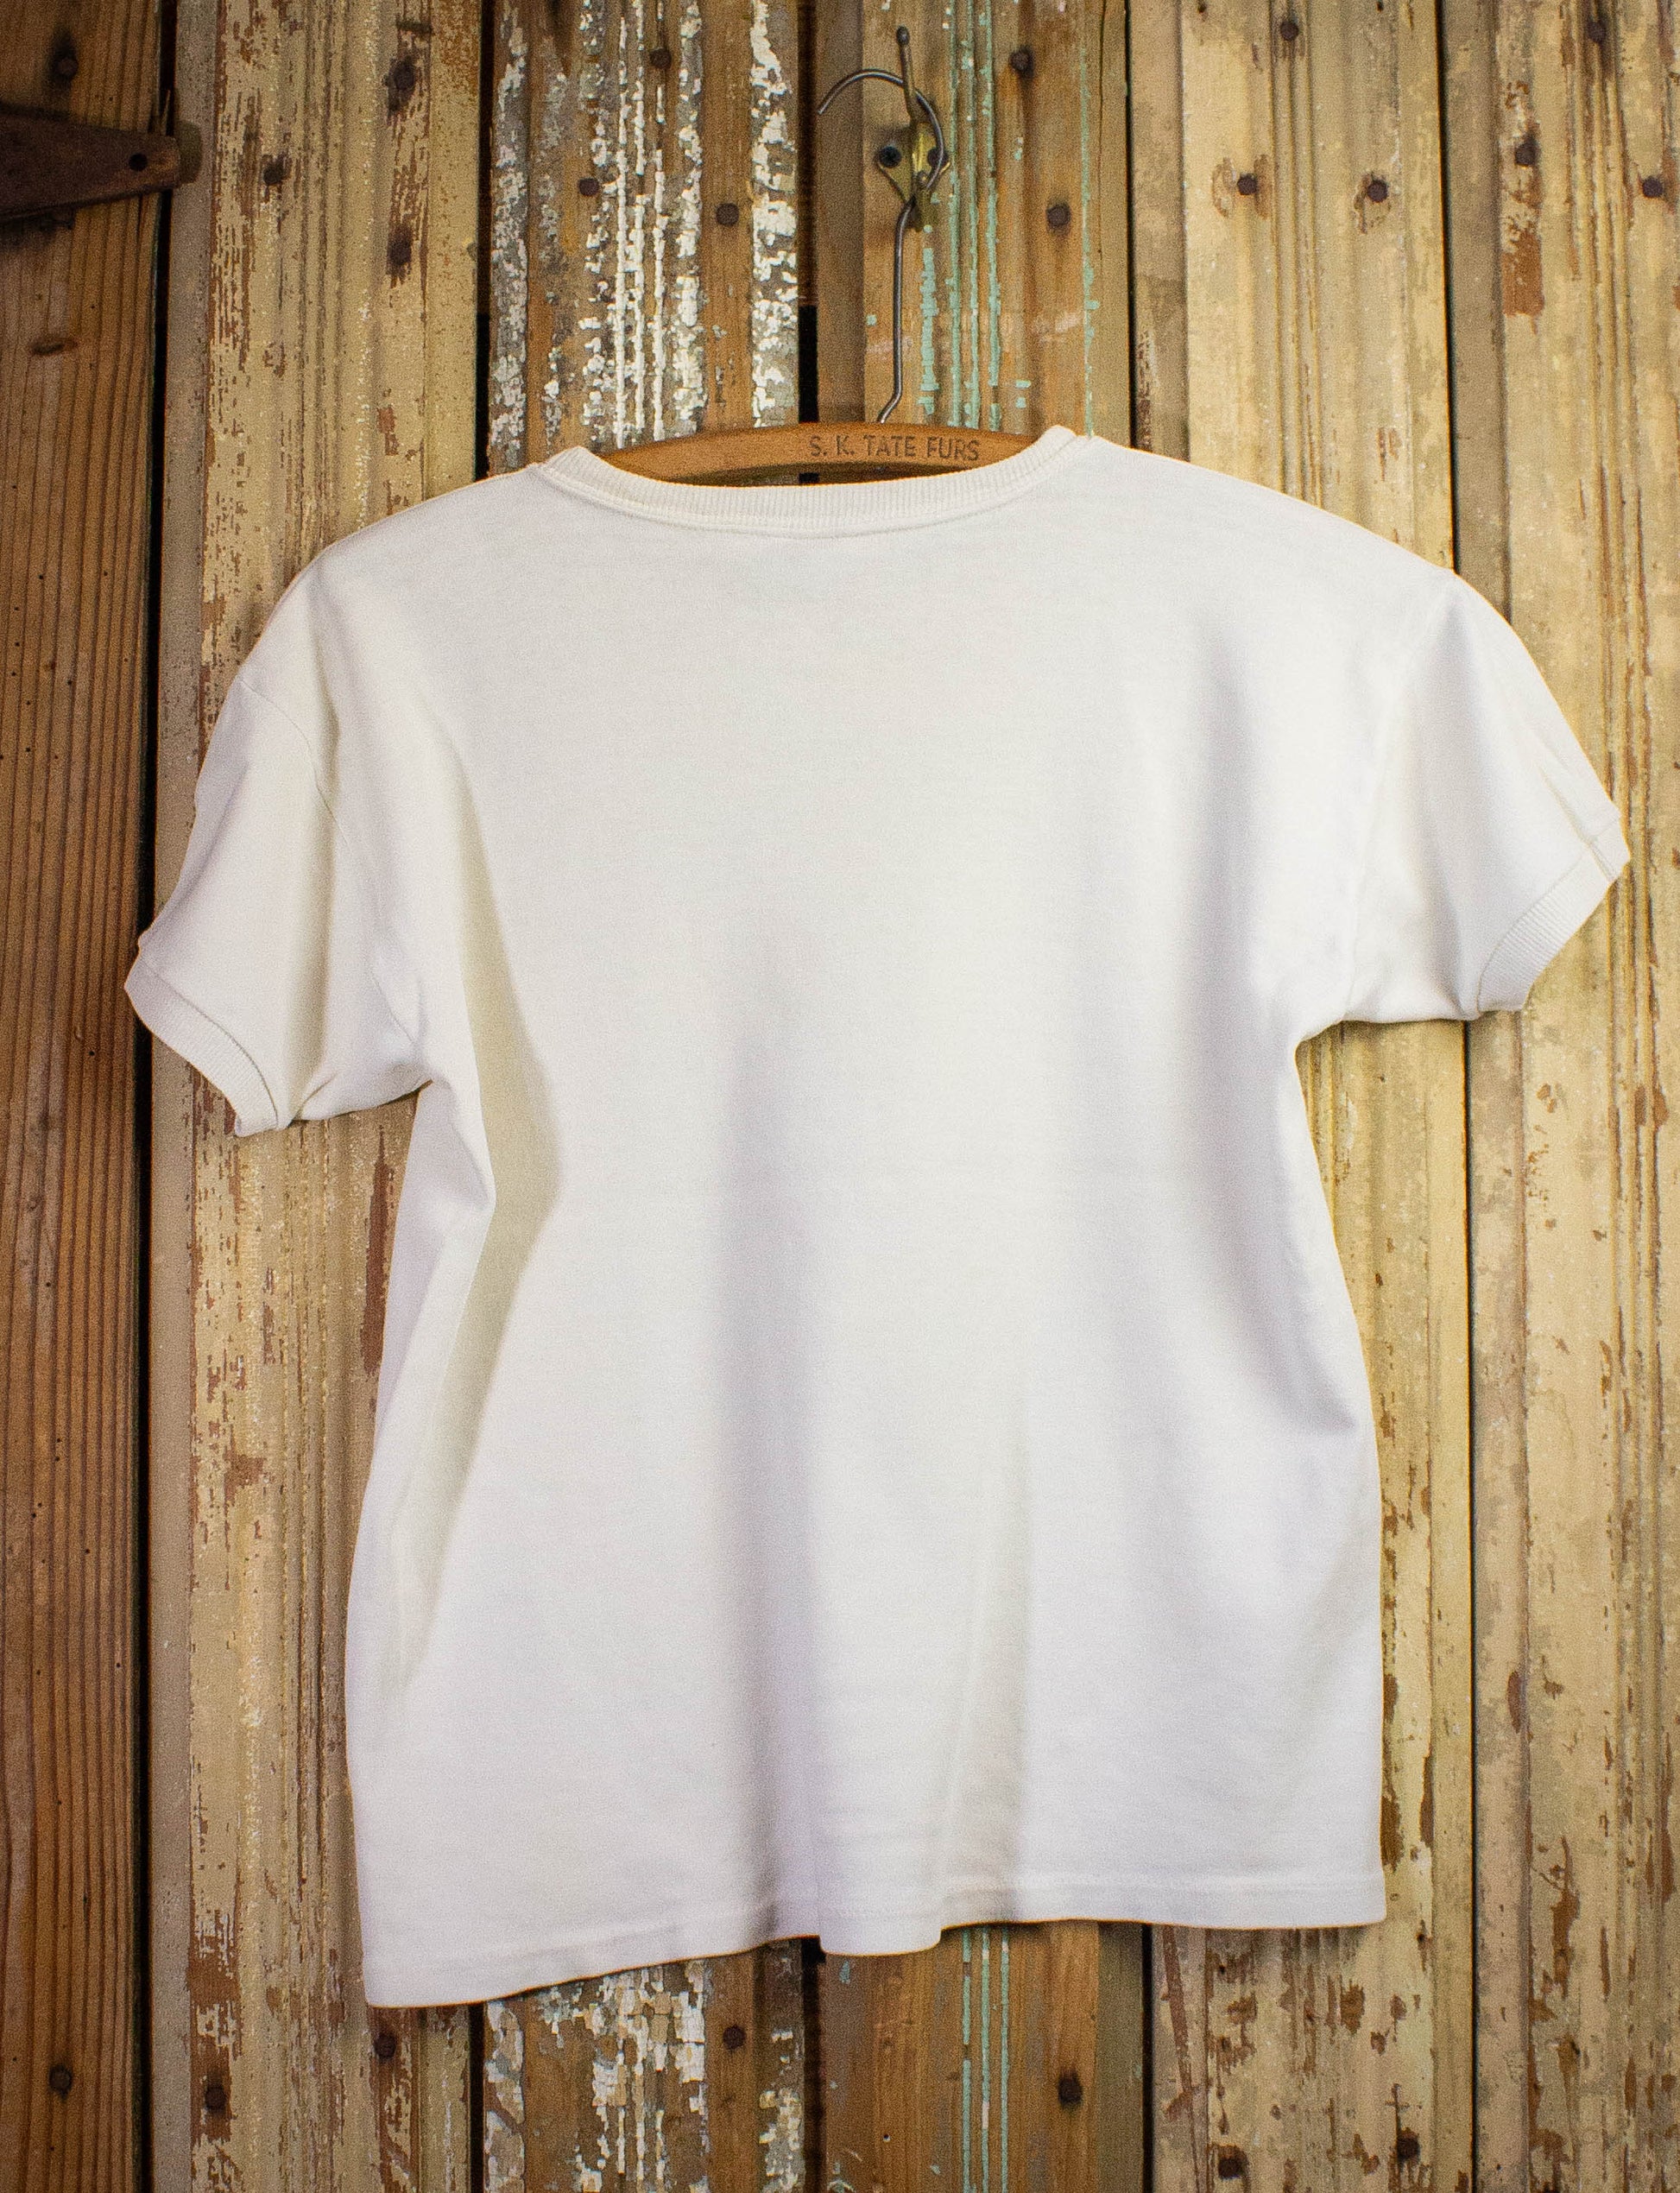 Vintage Cambridge University Graphic T Shirt 70s White Small